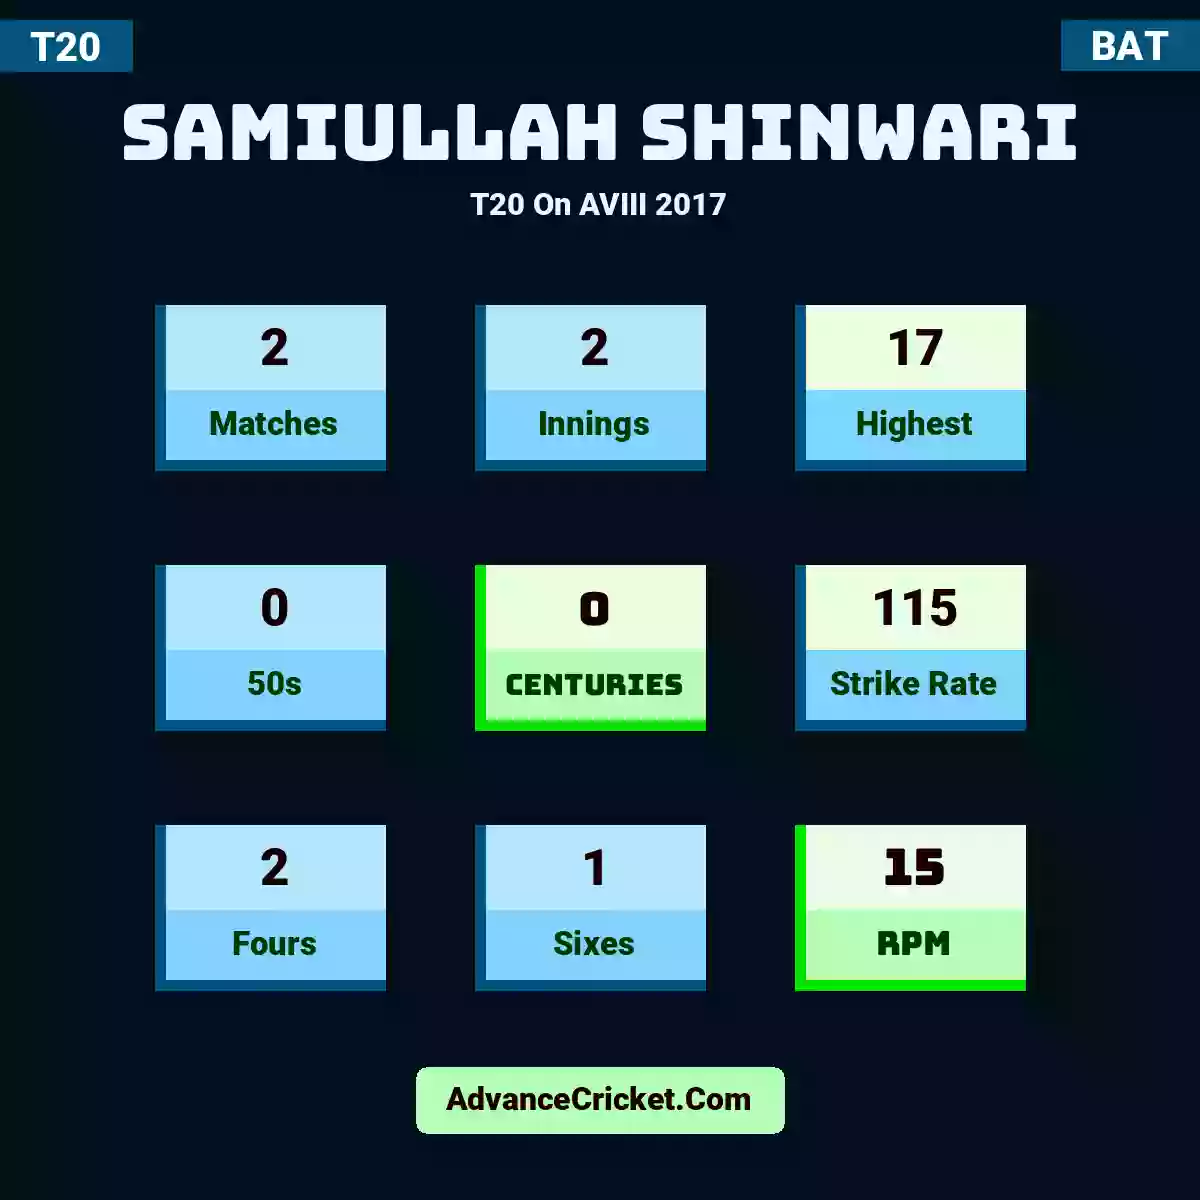 Samiullah Shinwari T20  On AVIII 2017, Samiullah Shinwari played 2 matches, scored 17 runs as highest, 0 half-centuries, and 0 centuries, with a strike rate of 115. S.Shinwari hit 2 fours and 1 sixes, with an RPM of 15.